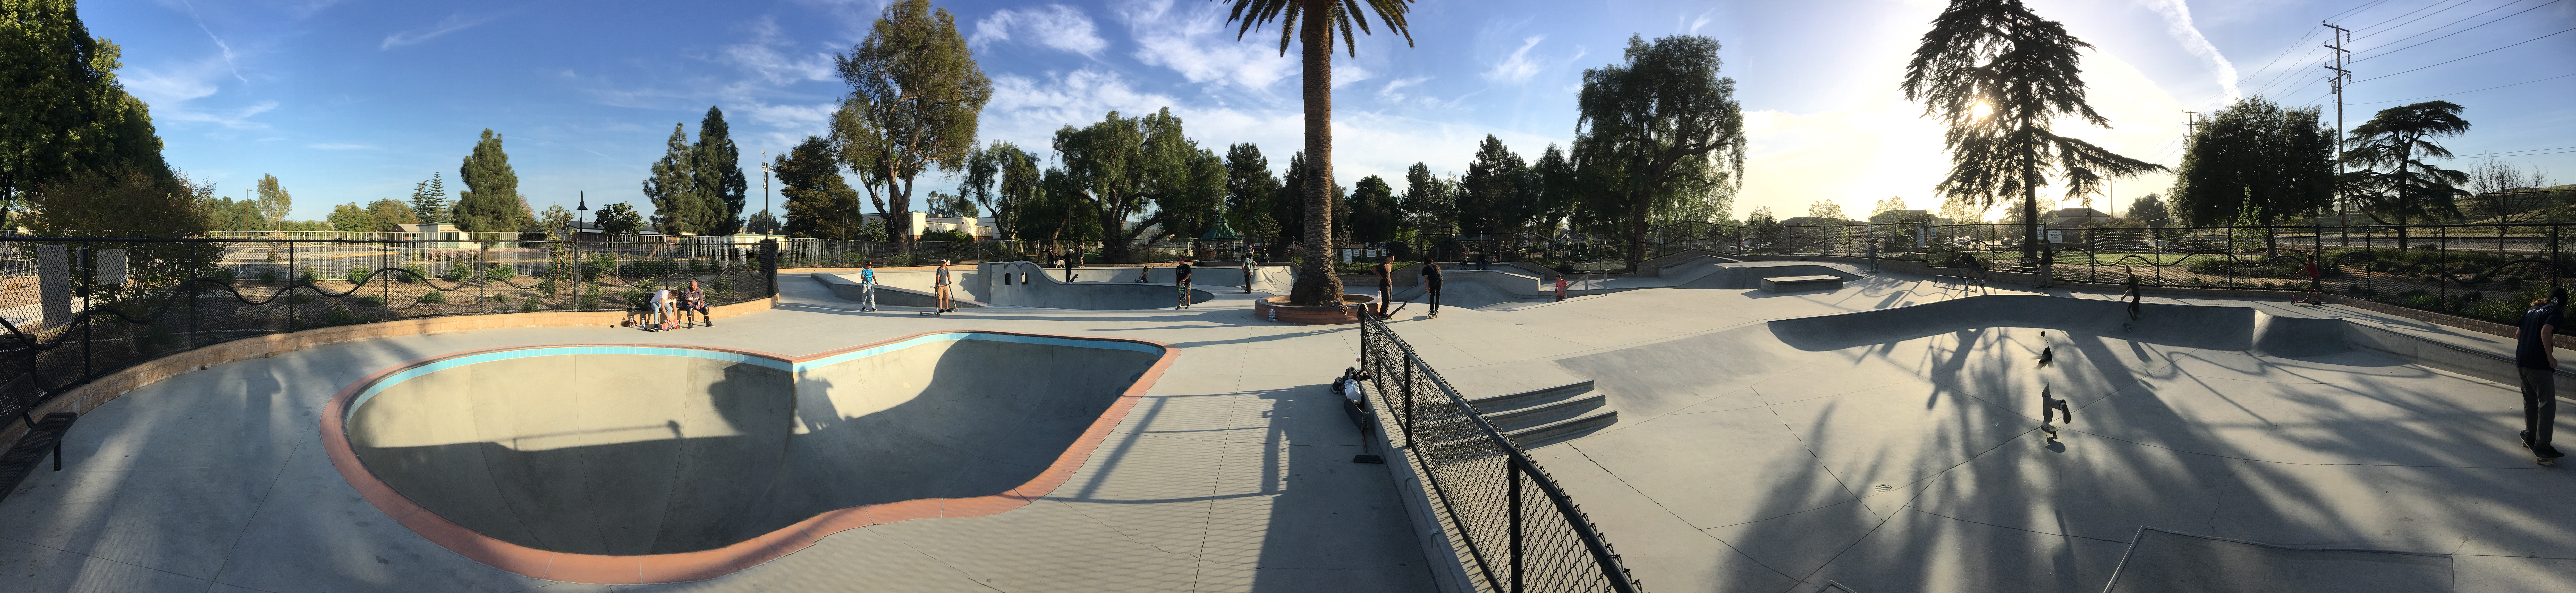 Moorpark skatepark